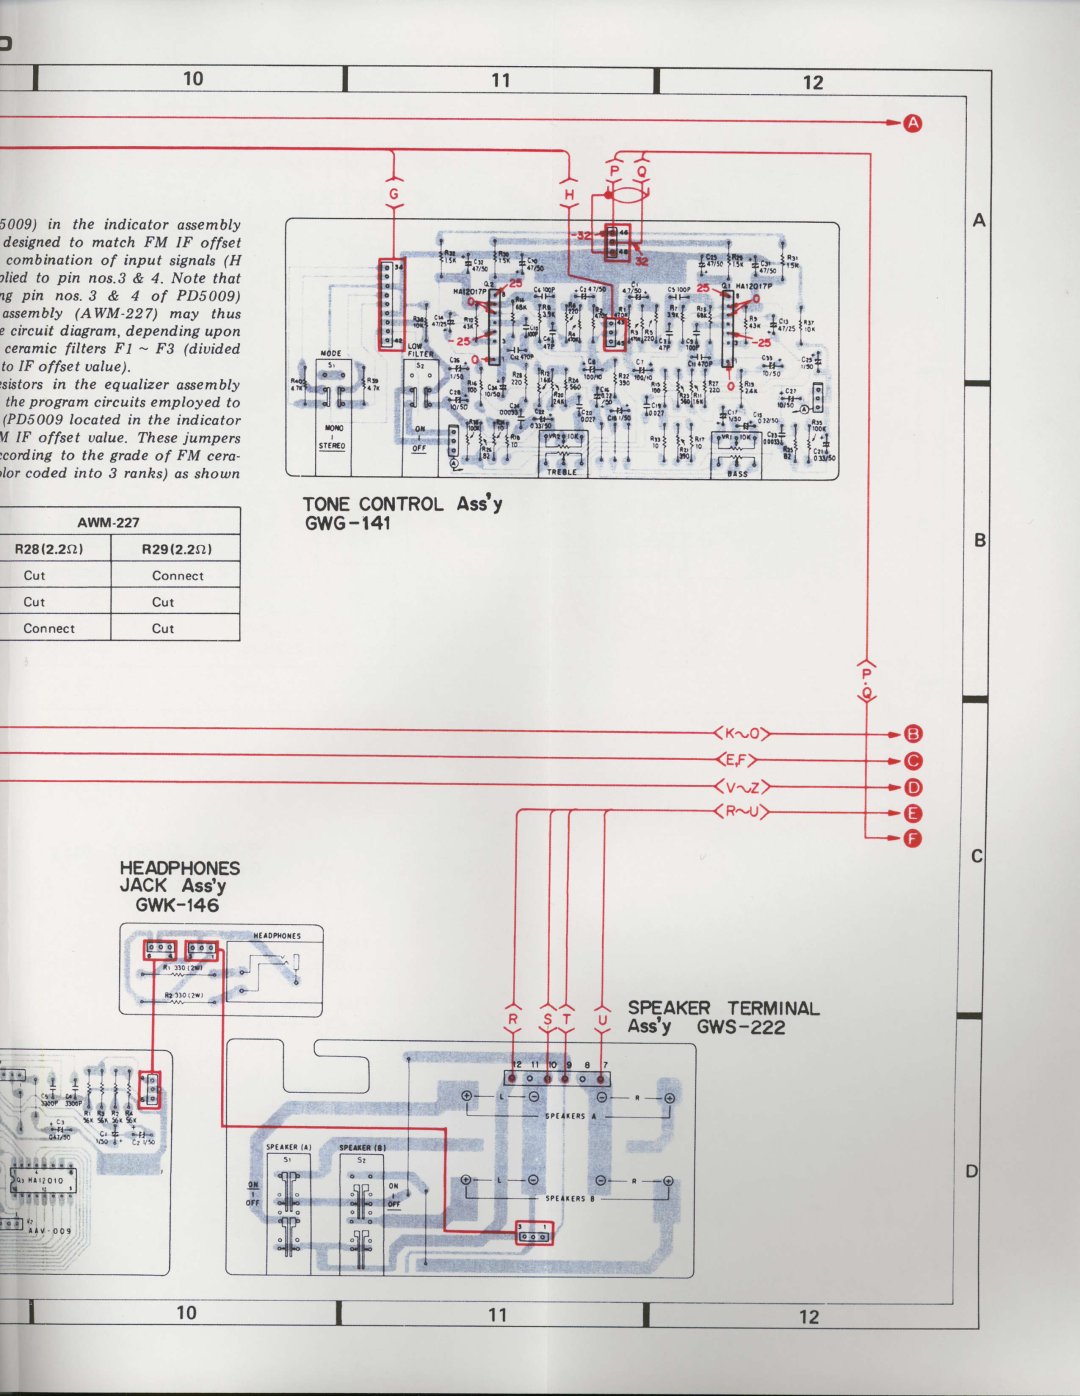 Pioneer SX-3800 manual o o e e, i,,tii, I F , I t, rtrf, TONECONTROLAssy, HEADPHONES JACK Assy GWK-146 